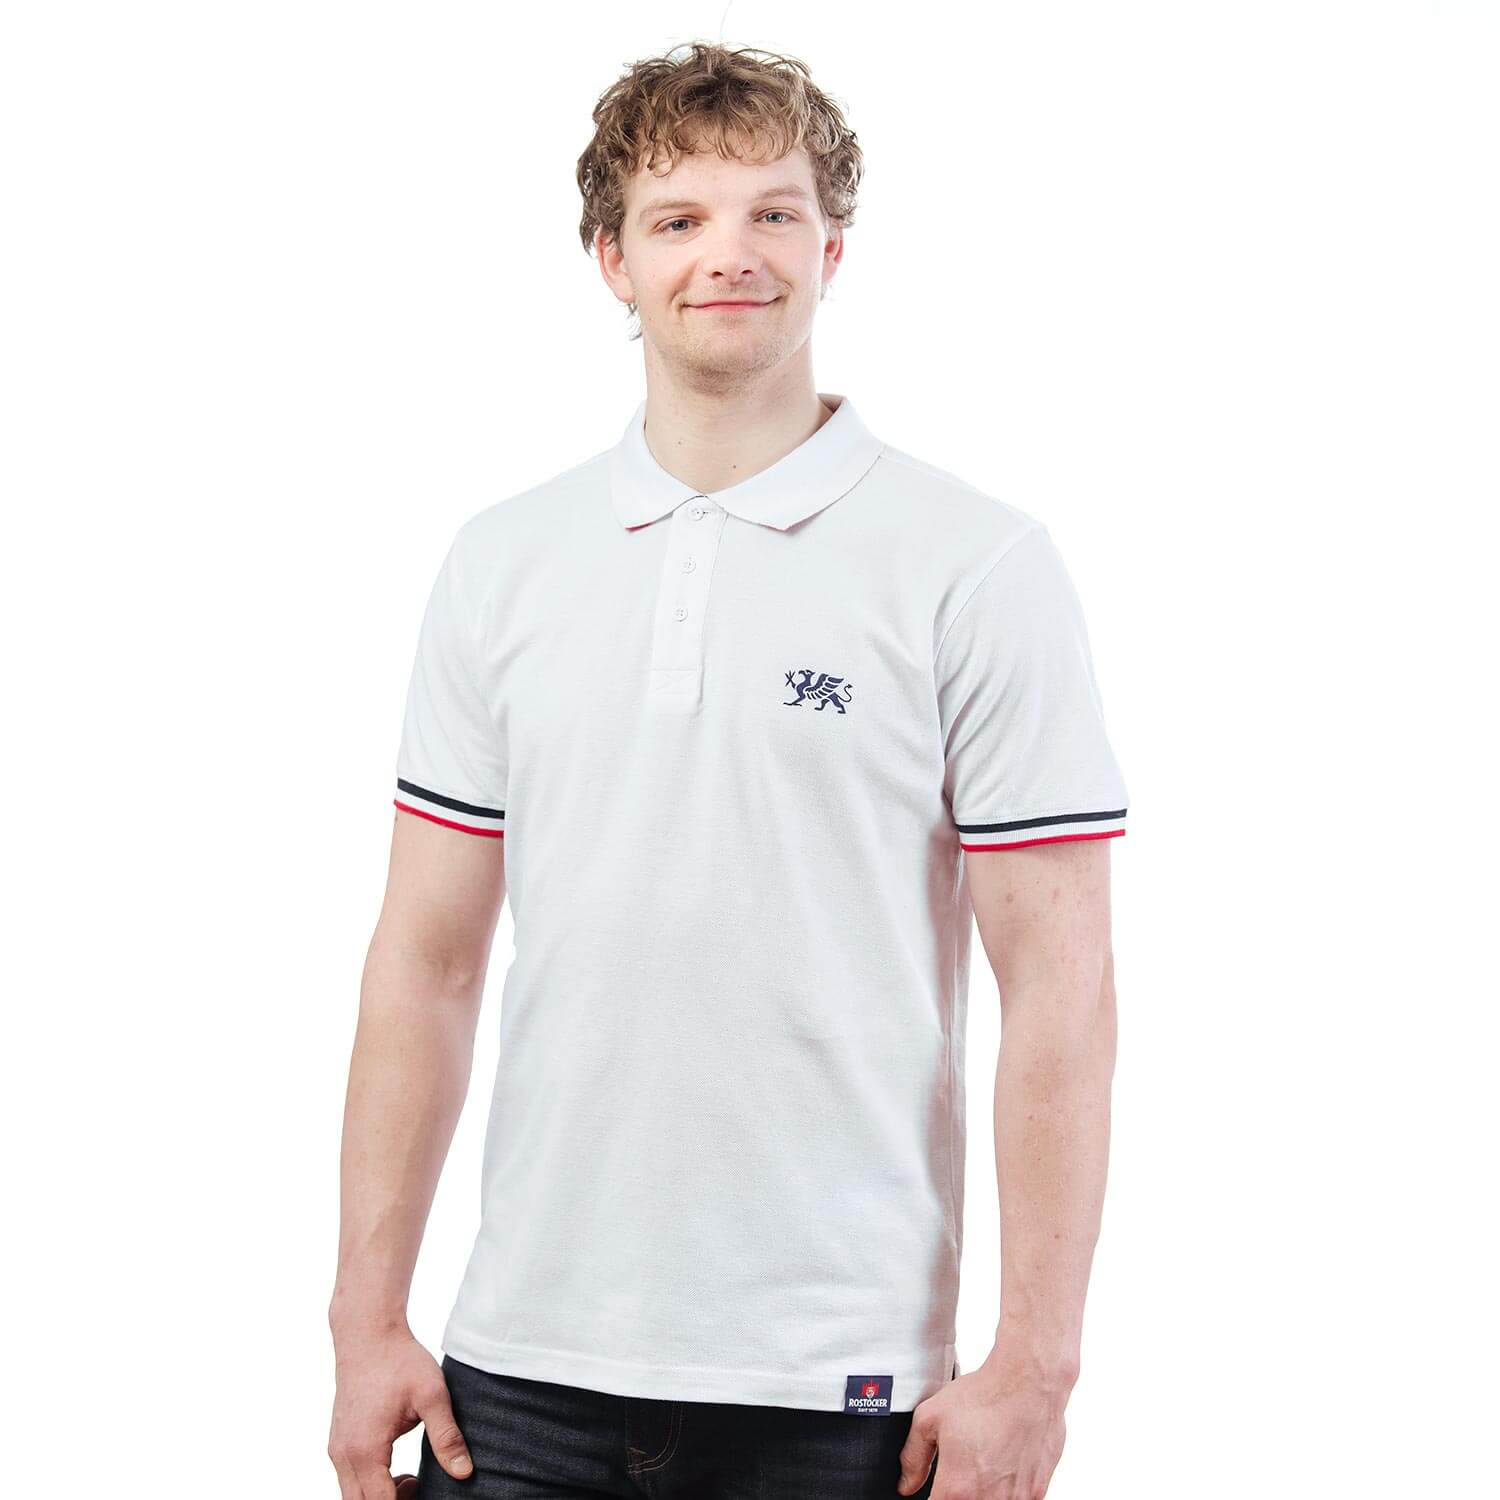 Rostocker Polo-Shirt, weiß